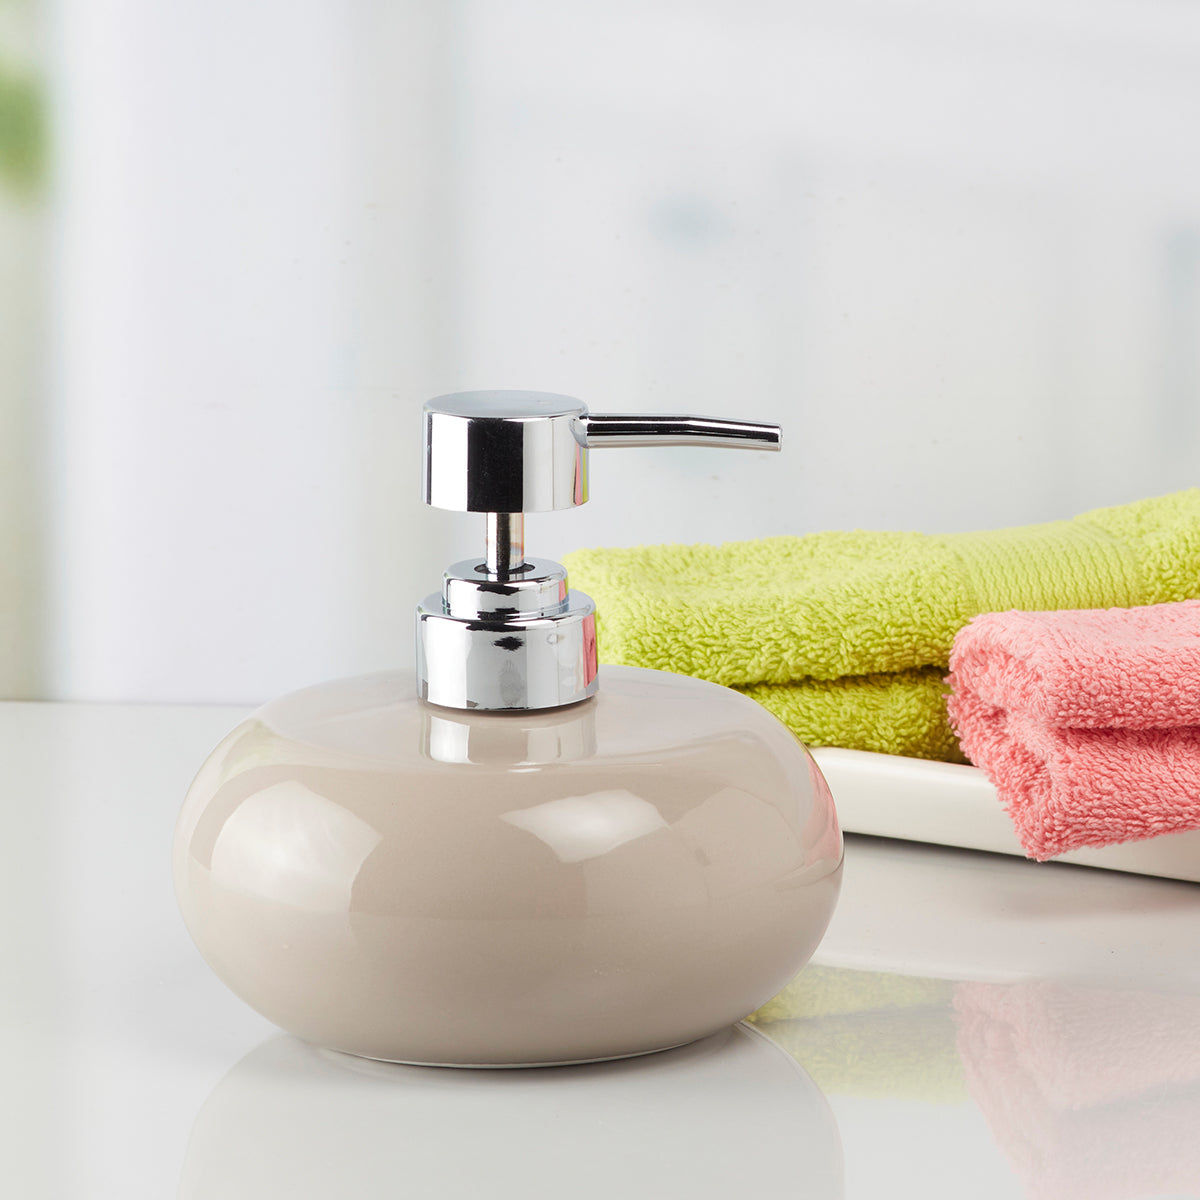 Ceramic Soap Dispenser handwash Pump for Bathroom, Set of 1, Black (9654)